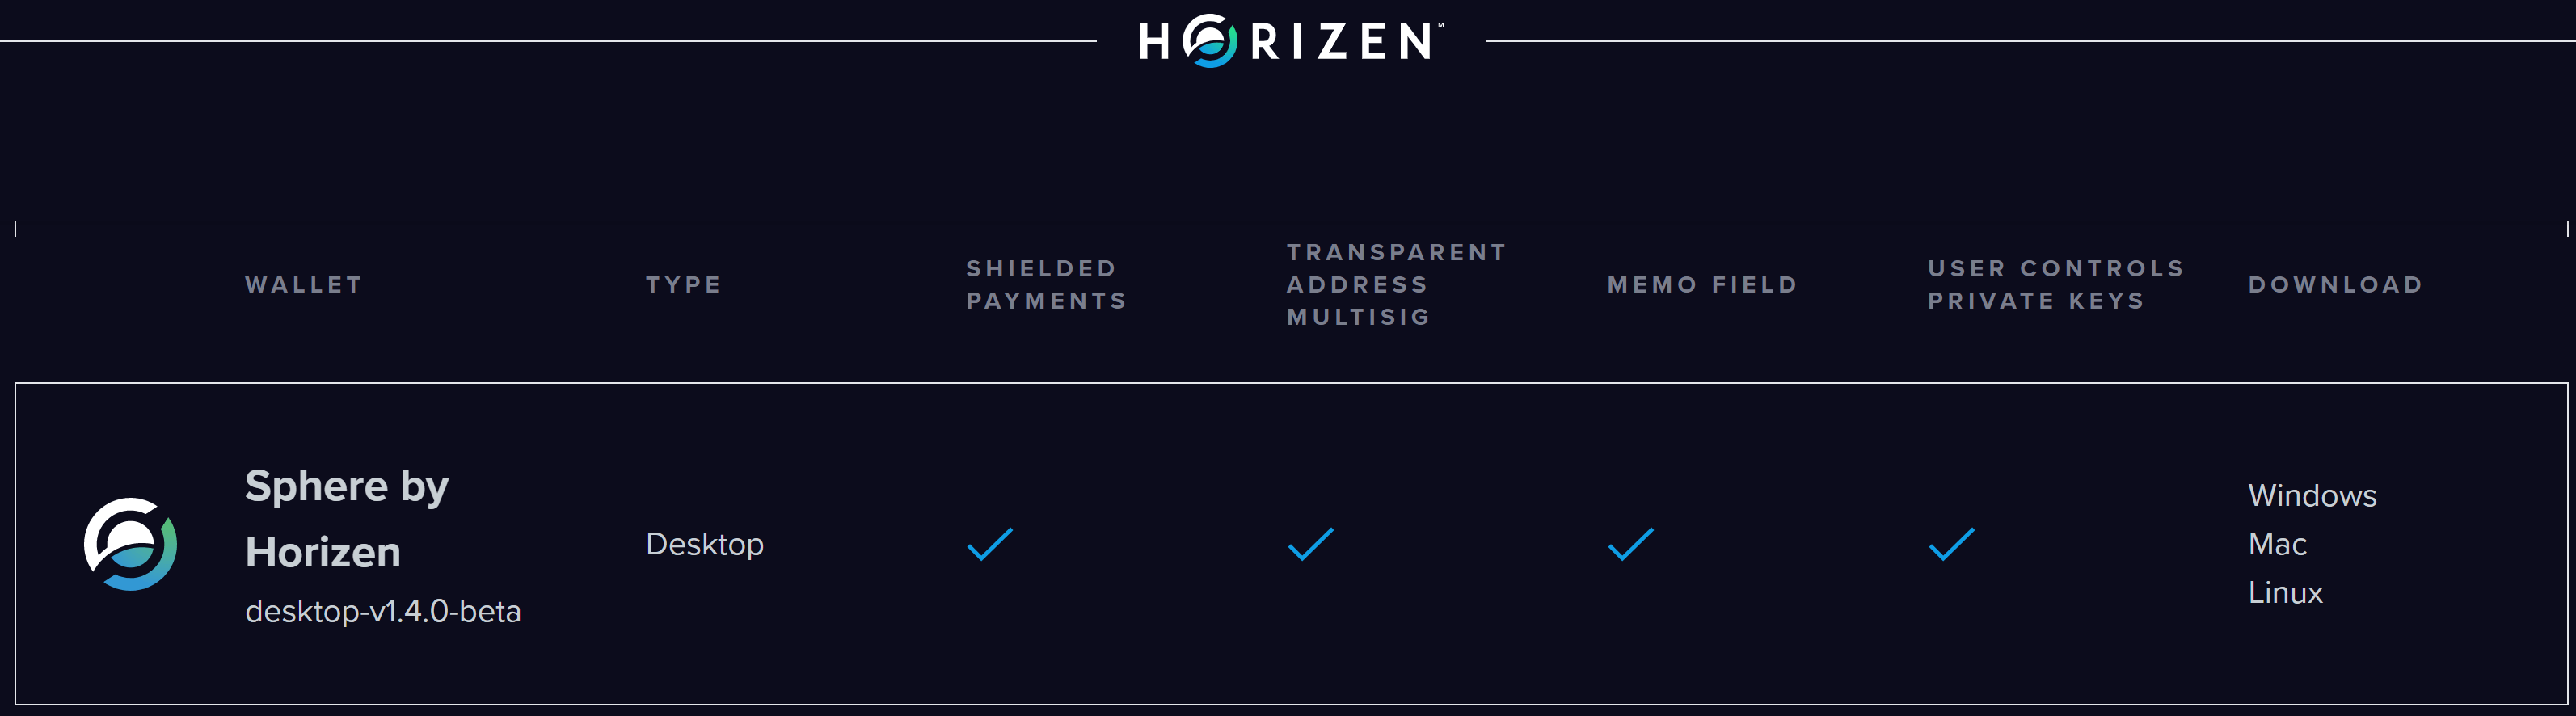 Horizen 官方钱包主页